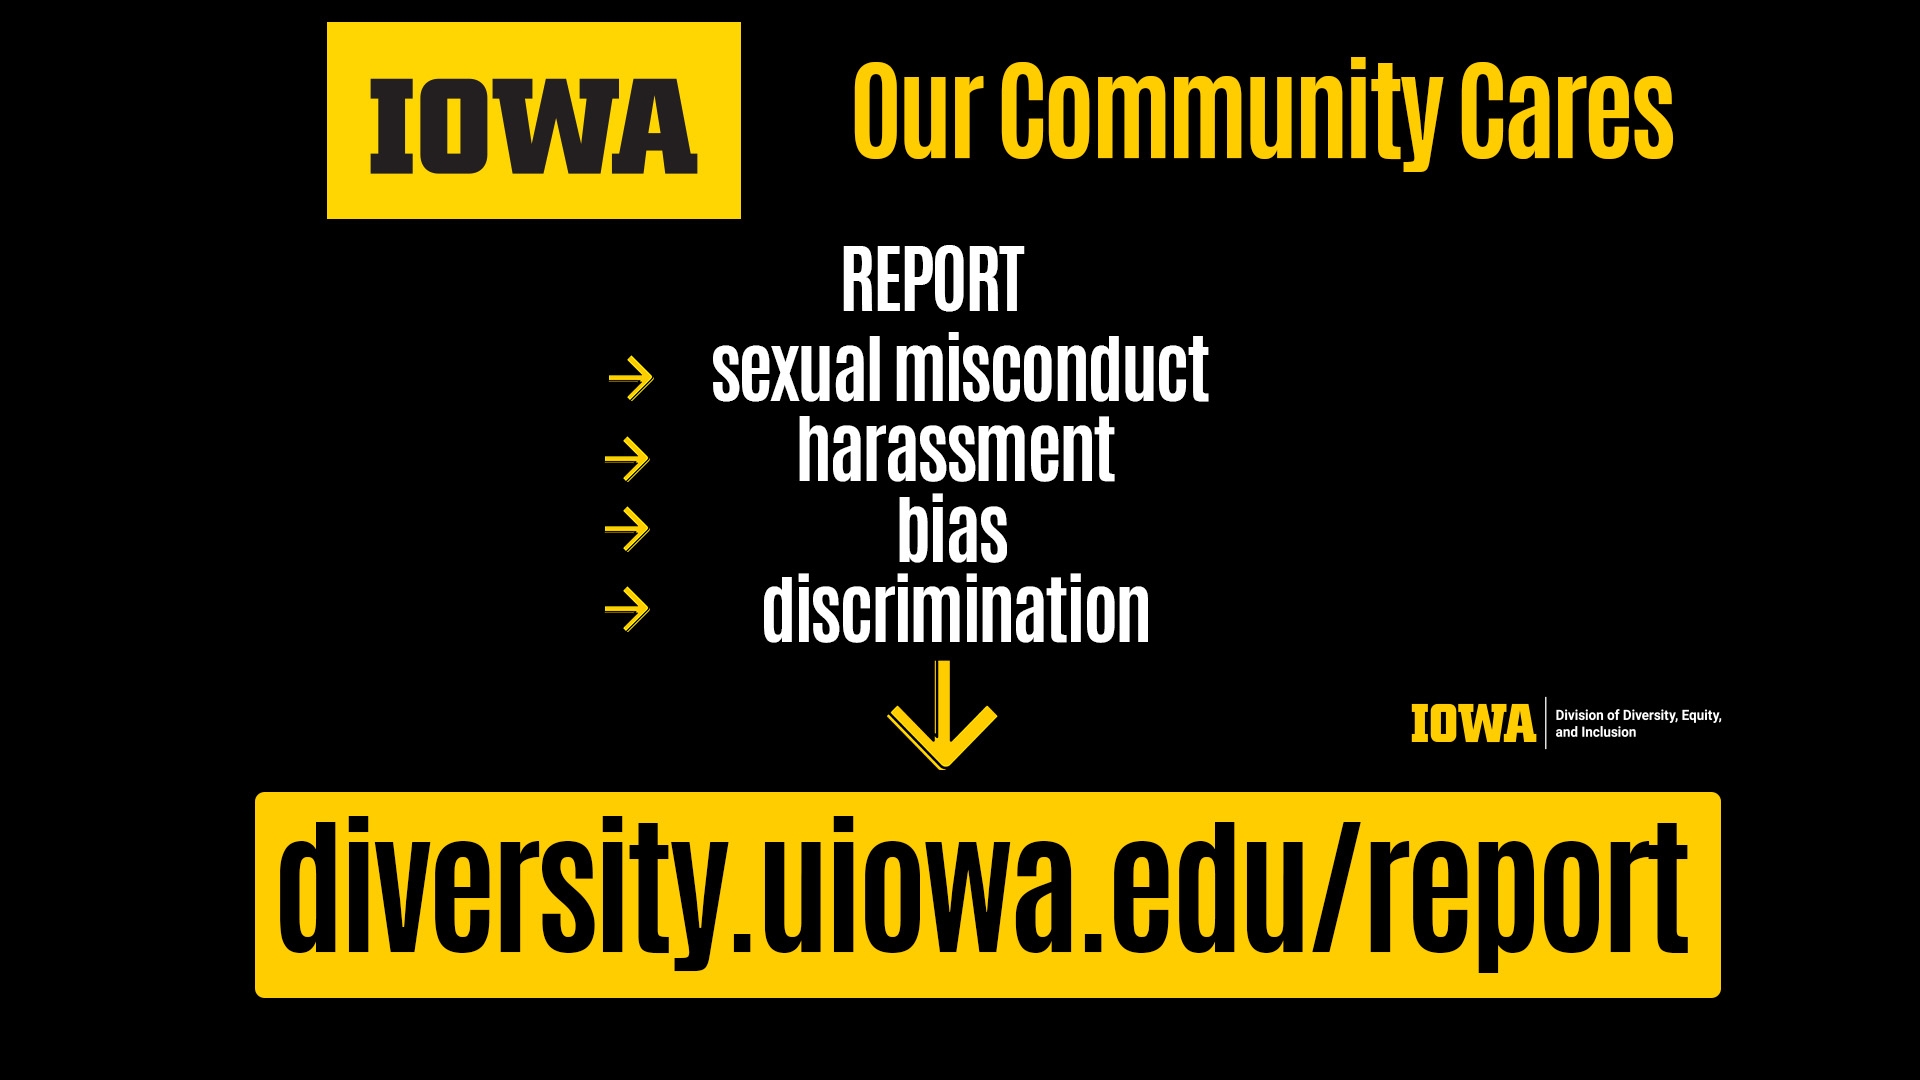 Our Community Cares Report Sexual misconduct, harassment, bias, discrimination diversity.uiowa.edu/report